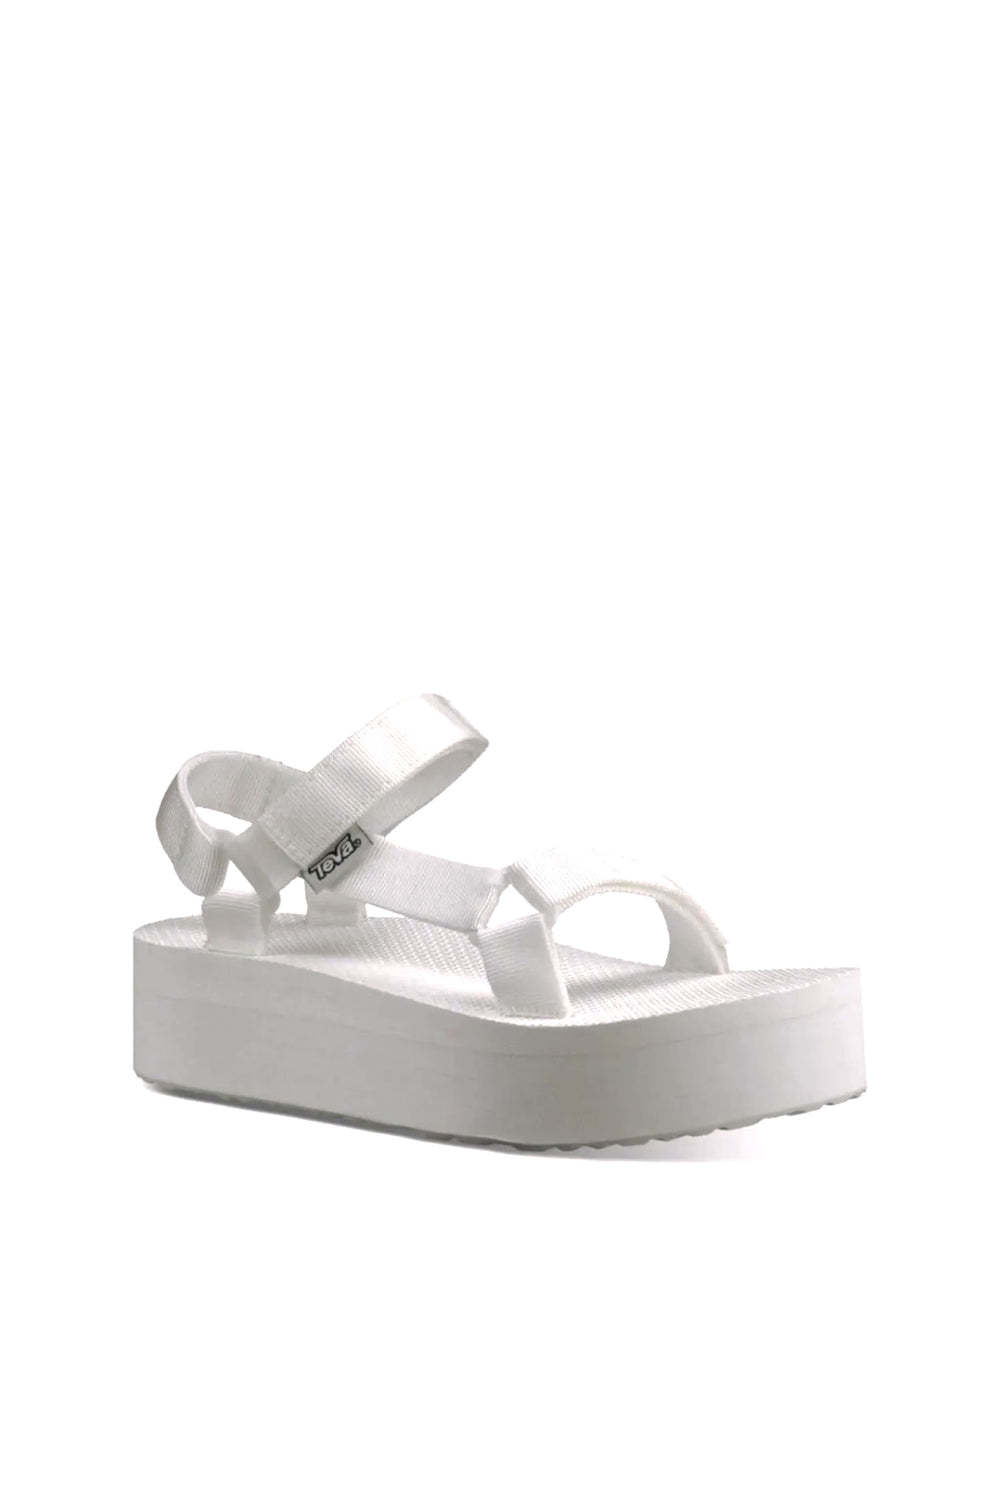 Bright White Flatform Sandal